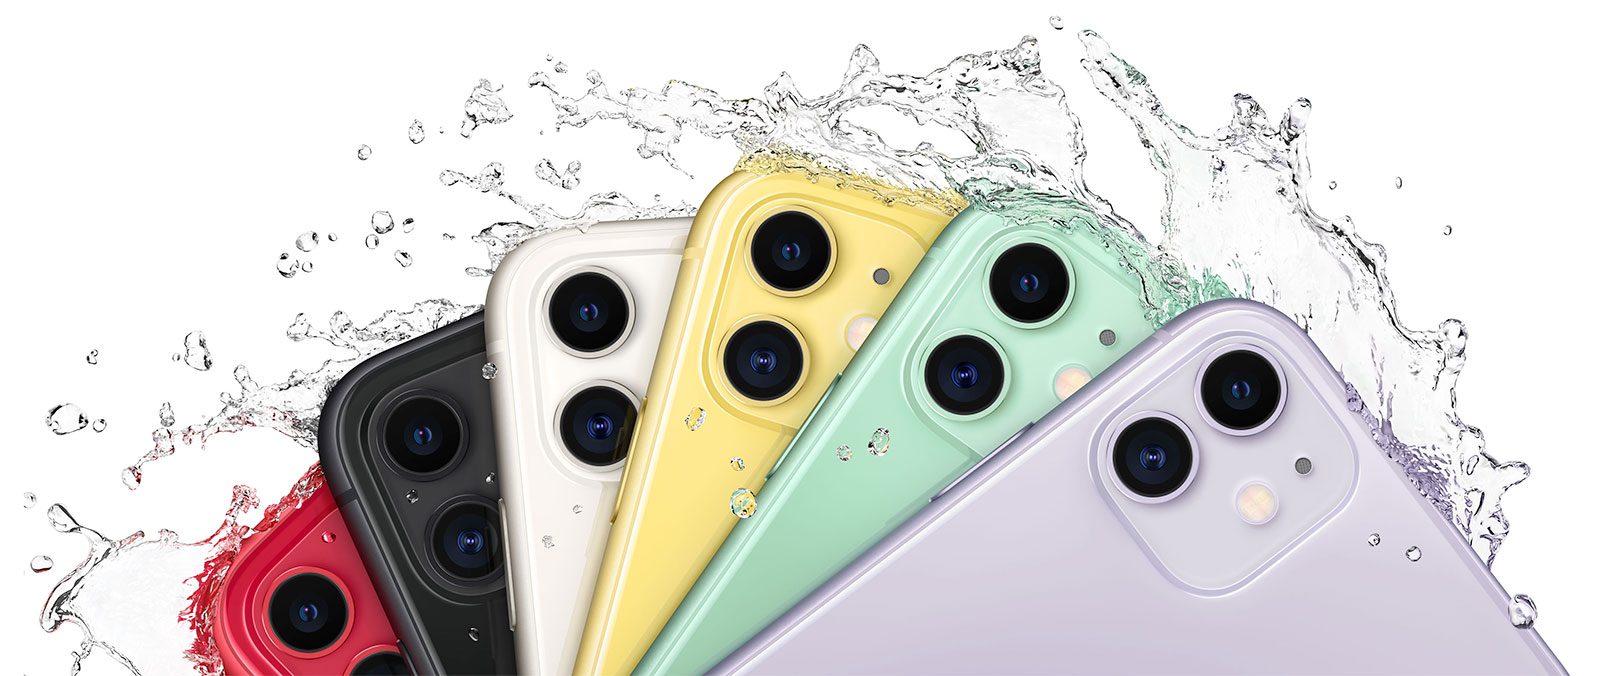 Colores del iPhone 11 resistente al agua